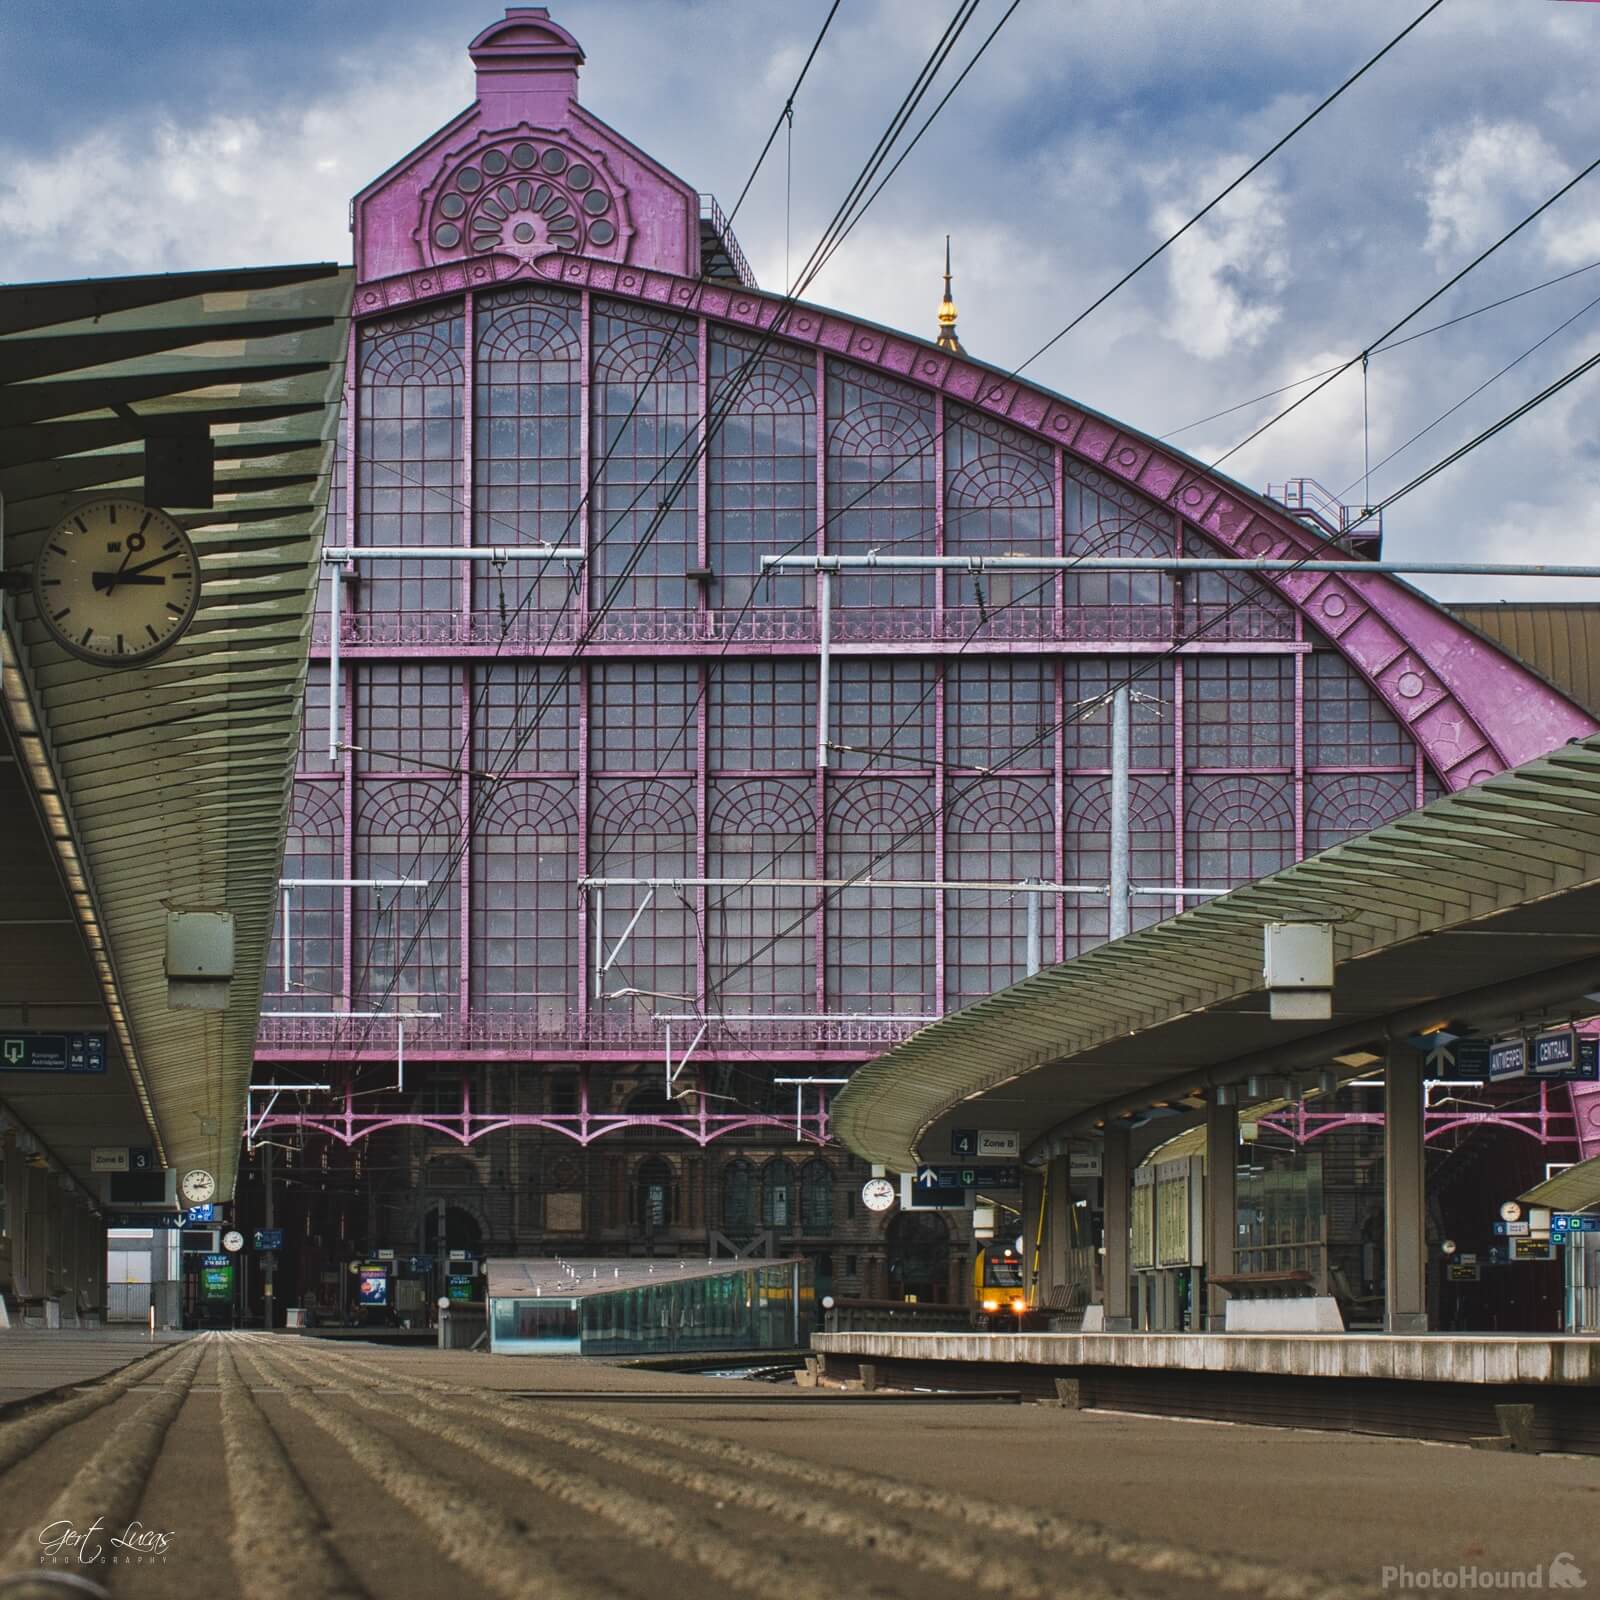 Image of Antwerpen Centraal Train Station - Platforms by Gert Lucas